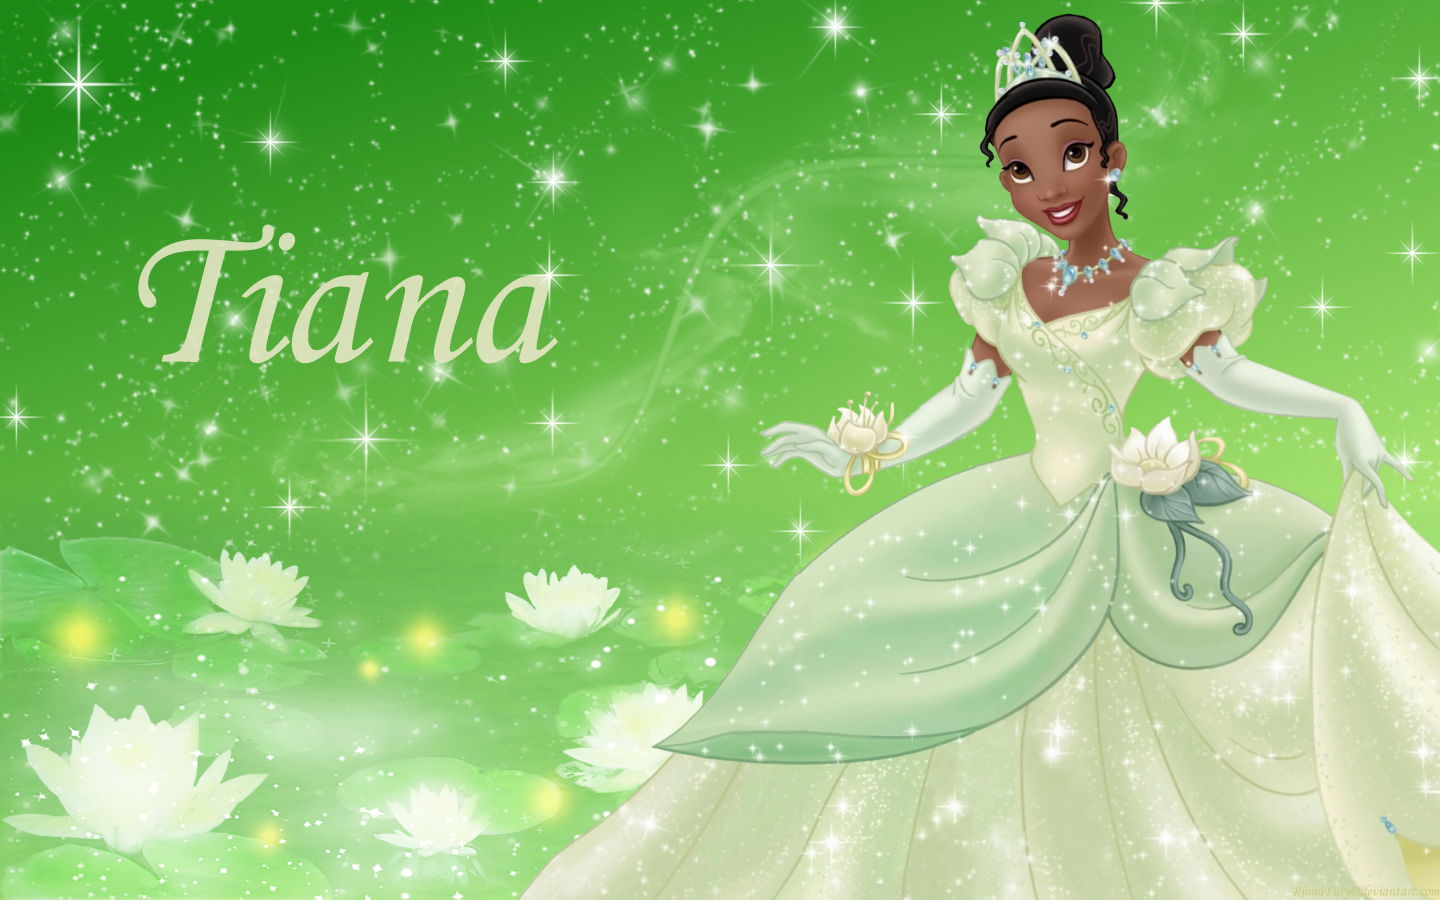 Disney Princess Wallpaper: Disney Princess Tiana. Disney princess tiana, Princess tiana, Walt disney princesses